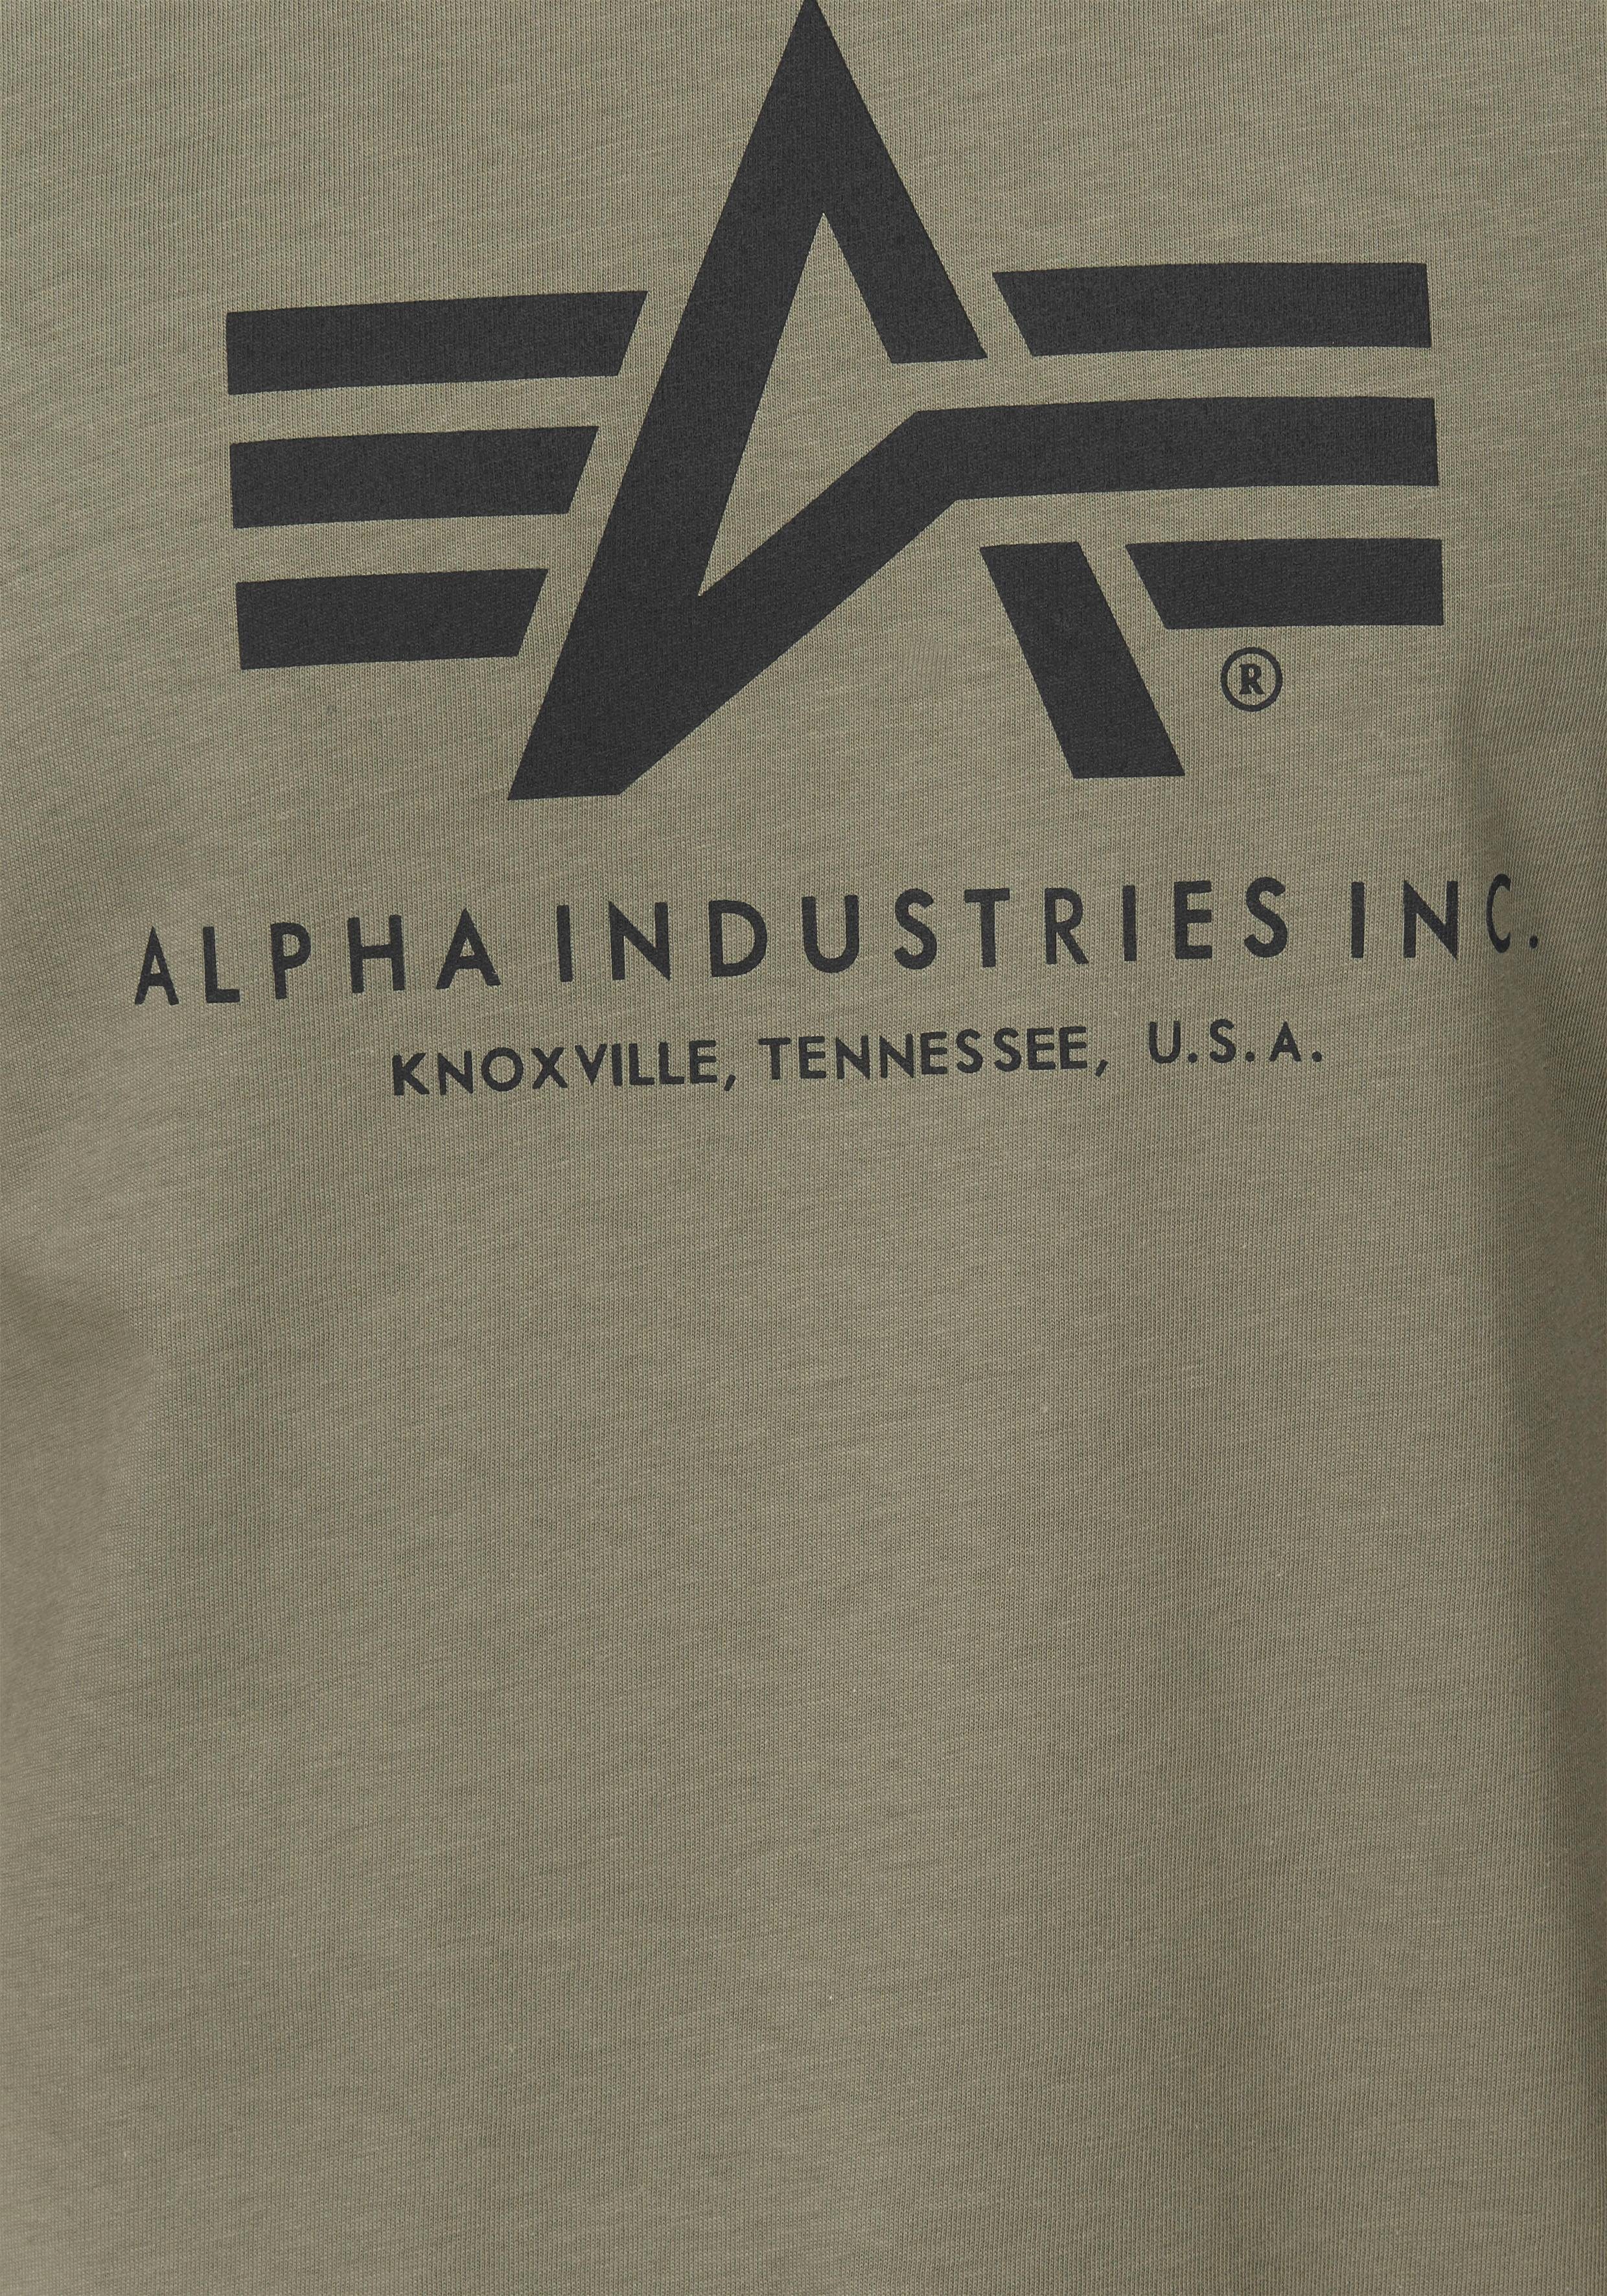 T-Shirt Alpha Industries T-Shirt Basic olive